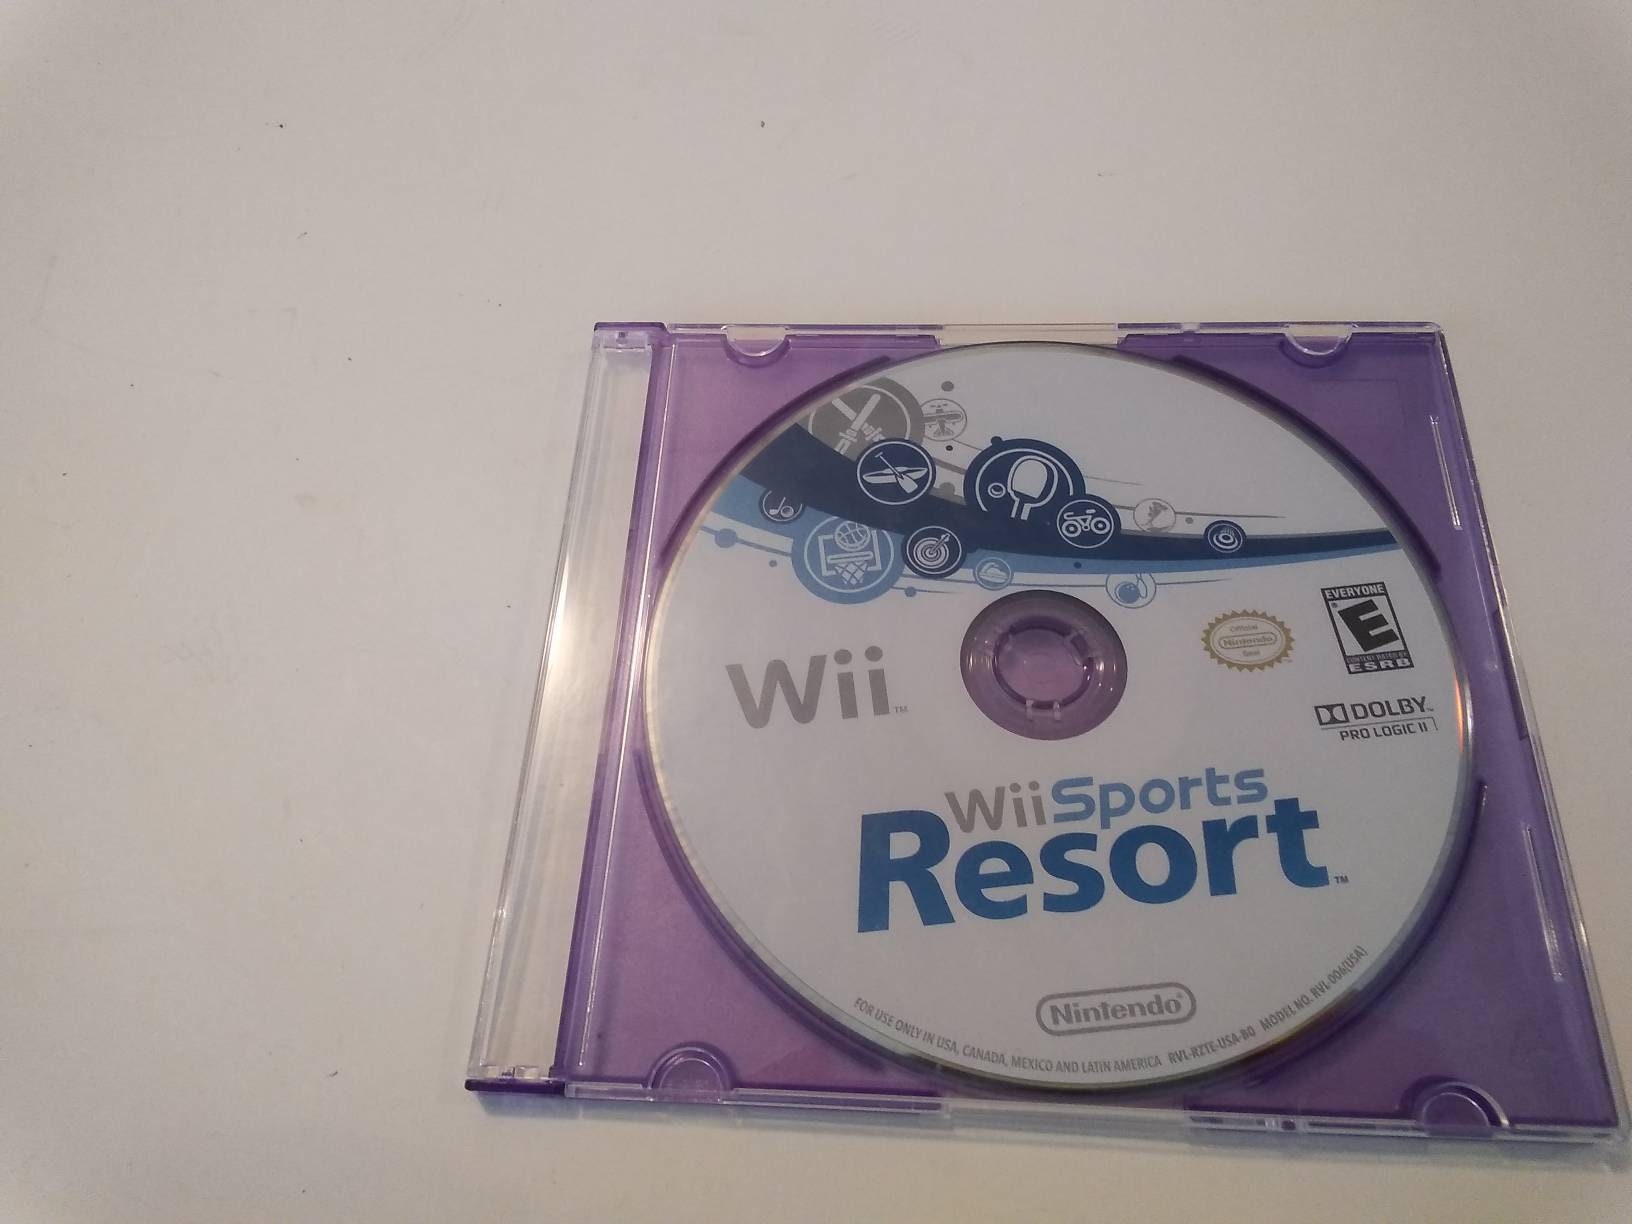 Nintendo Wii U 32gb Deluxe Desbloqueado Com Hd De 320gb(haxchi) + Microsd  8gb + Controle + Wii Sports/sports Resort - Desconto no Preço